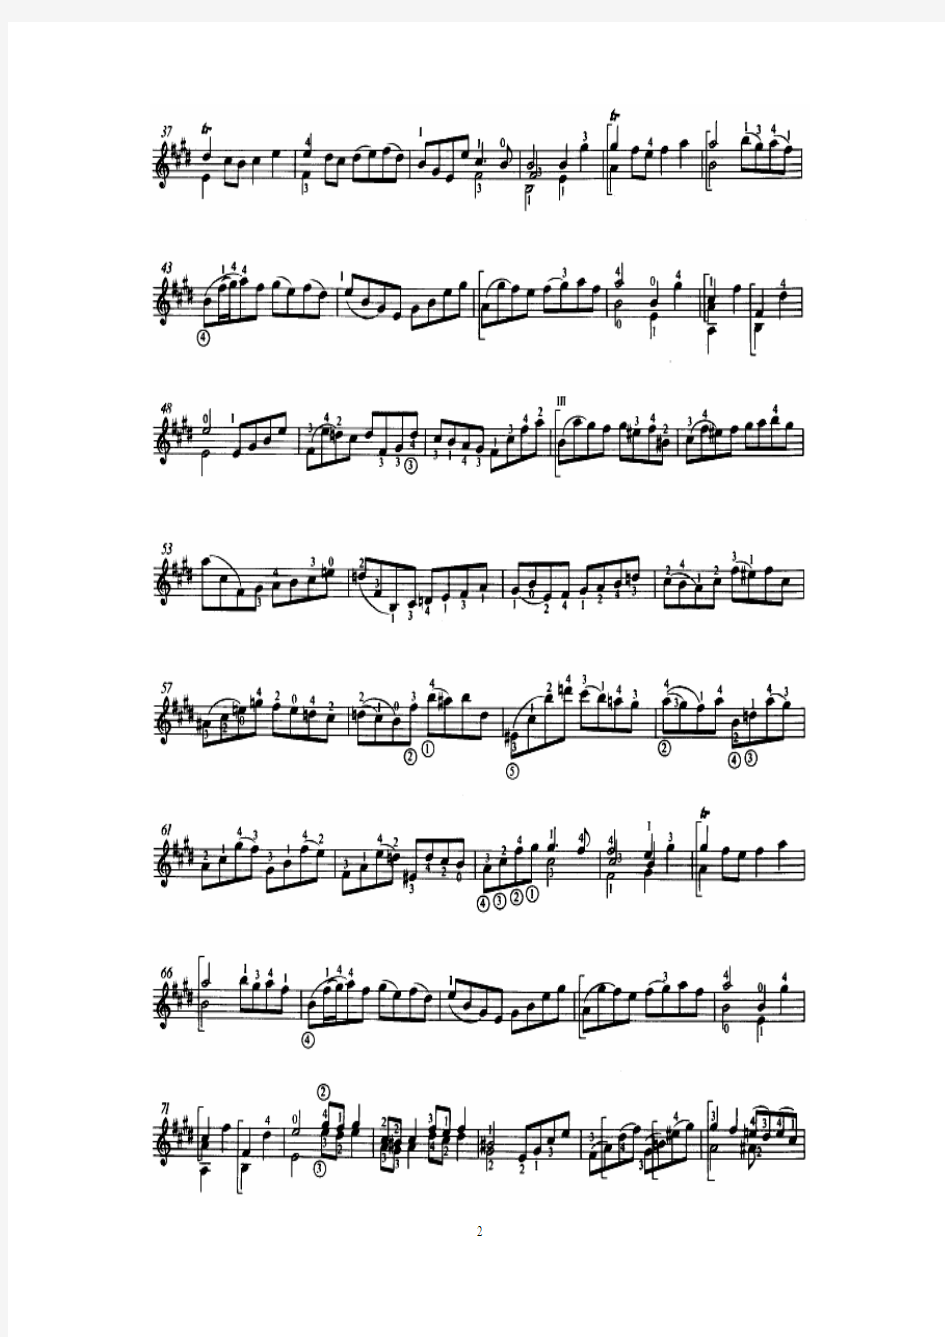 加伏特(GAVOTTE en RONDEAU),Violin Partita No.3-BWV1006;巴赫(John Sebastian Bach) 古典吉他谱